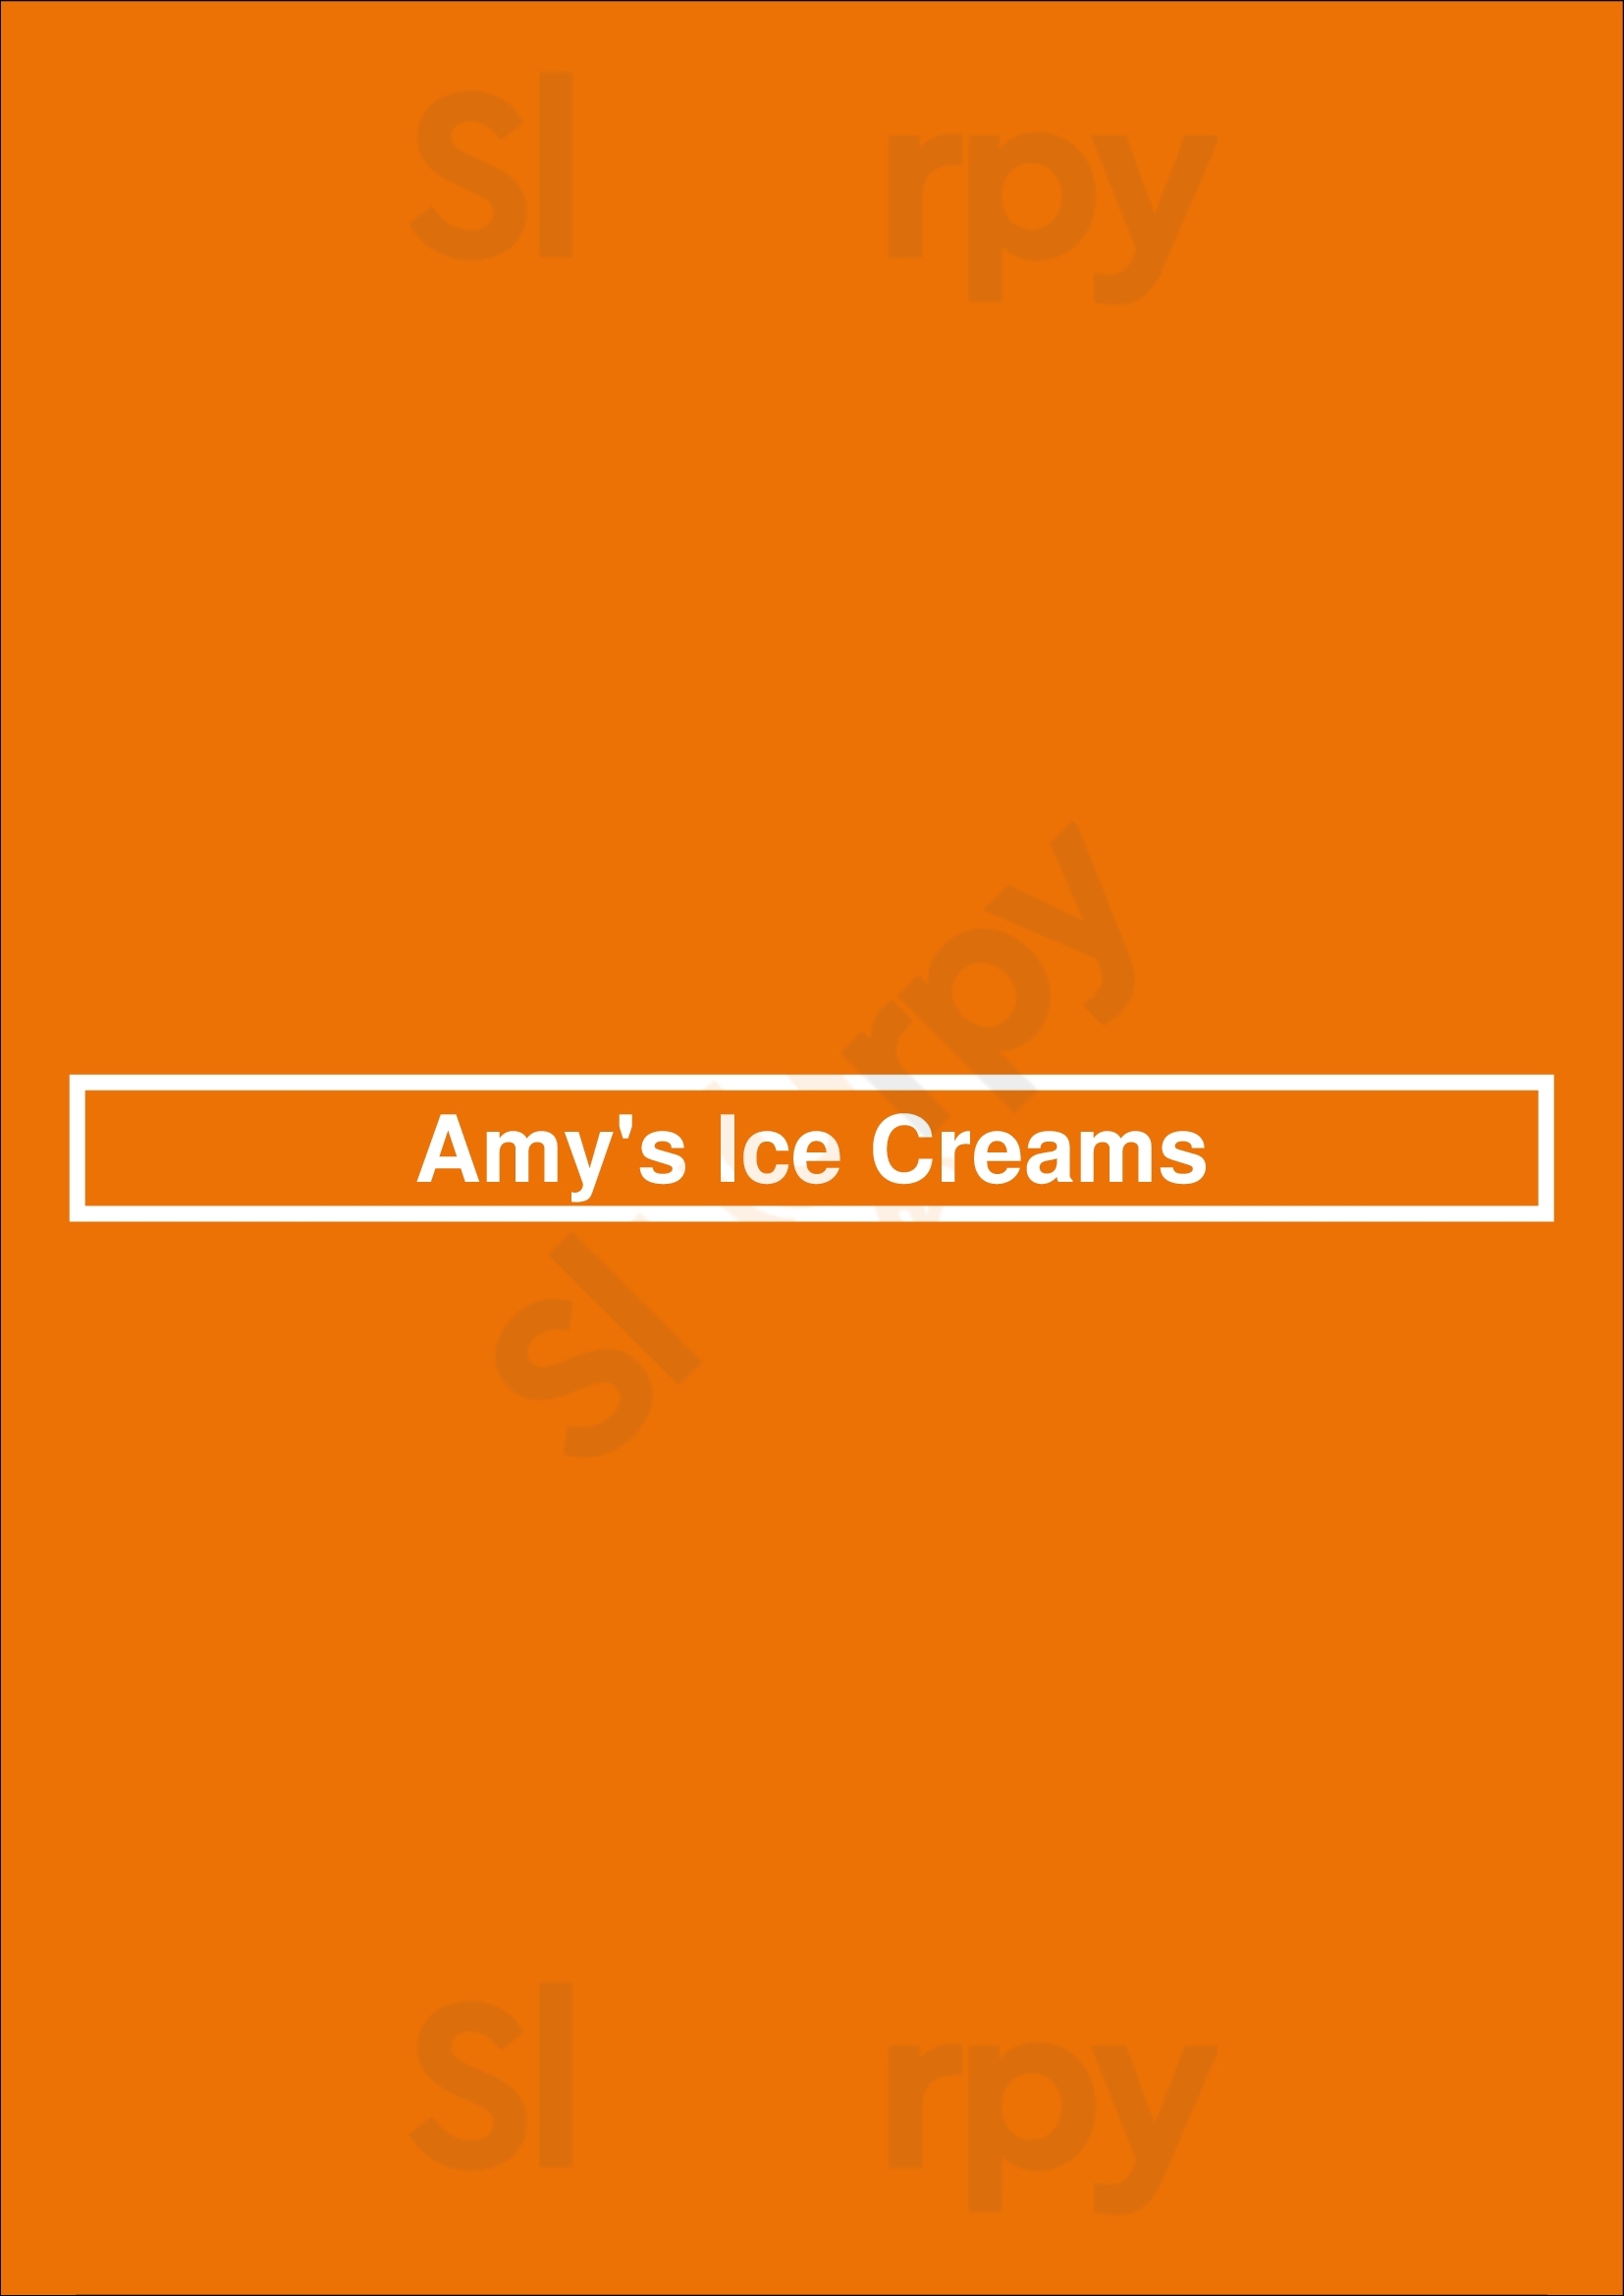 Amy's Ice Creams Austin Menu - 1